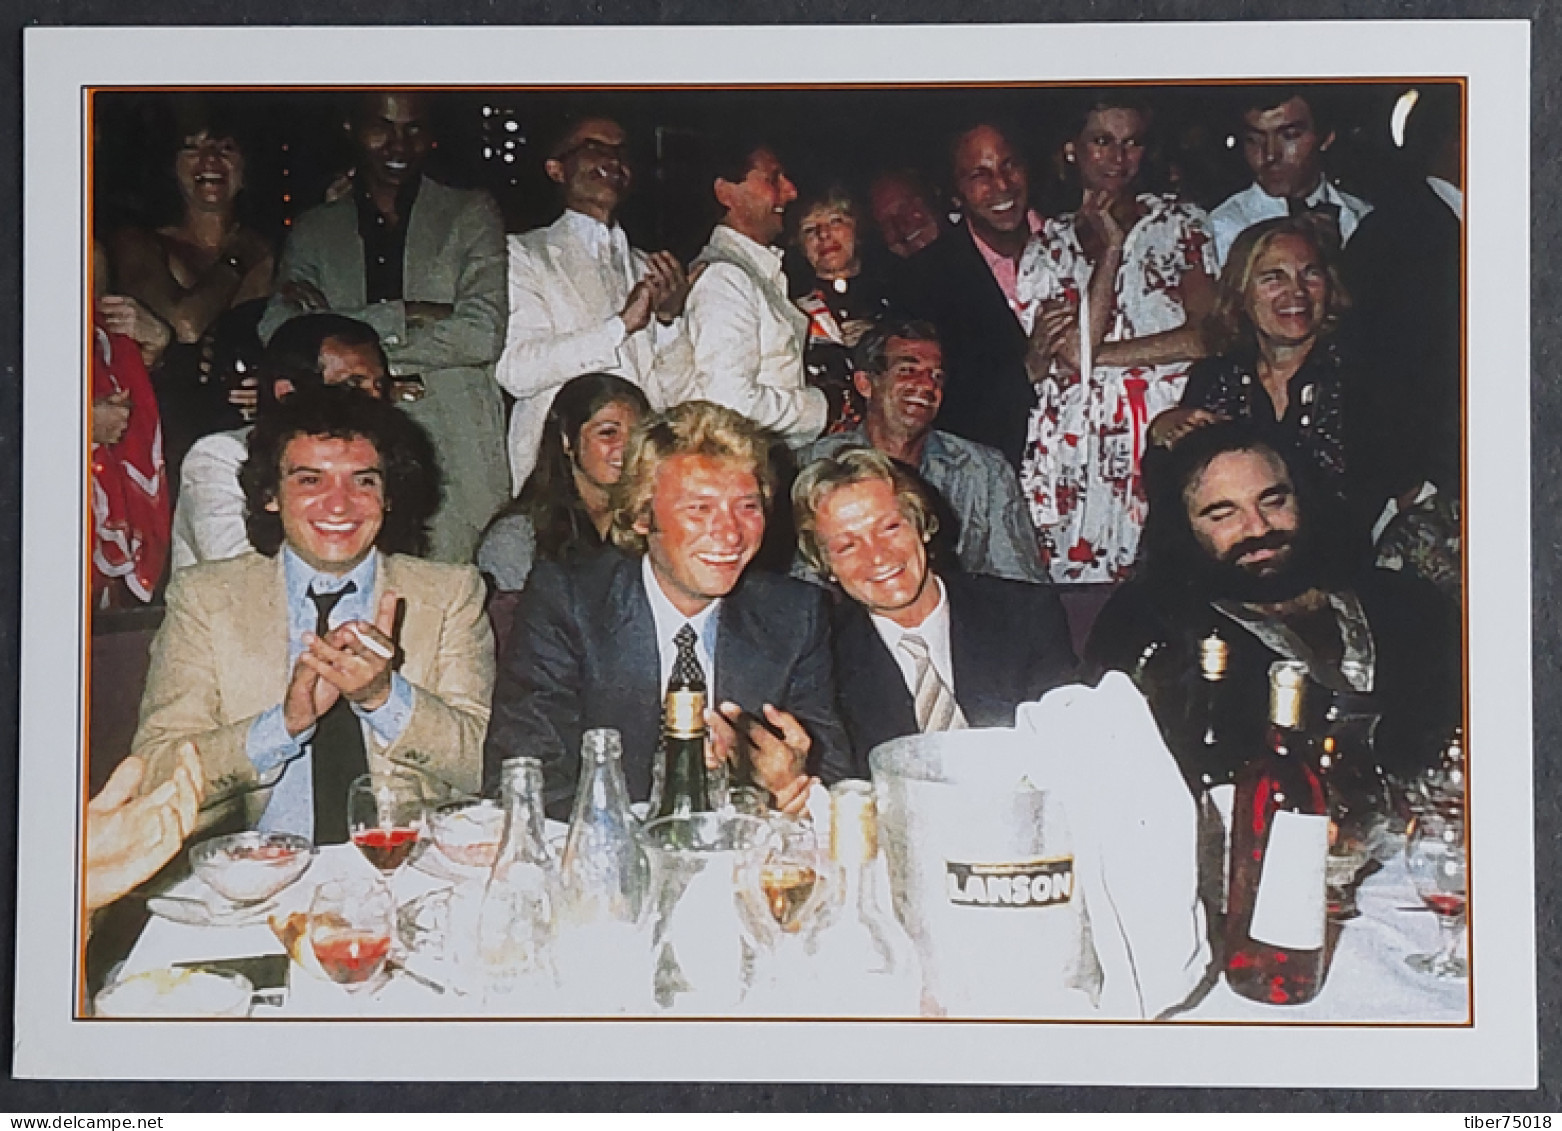 Carte Postale : Johnny Hallyday (Elysées Matignon 1977) Michel Sardou, Claude François, Demis Roussos - Artistes